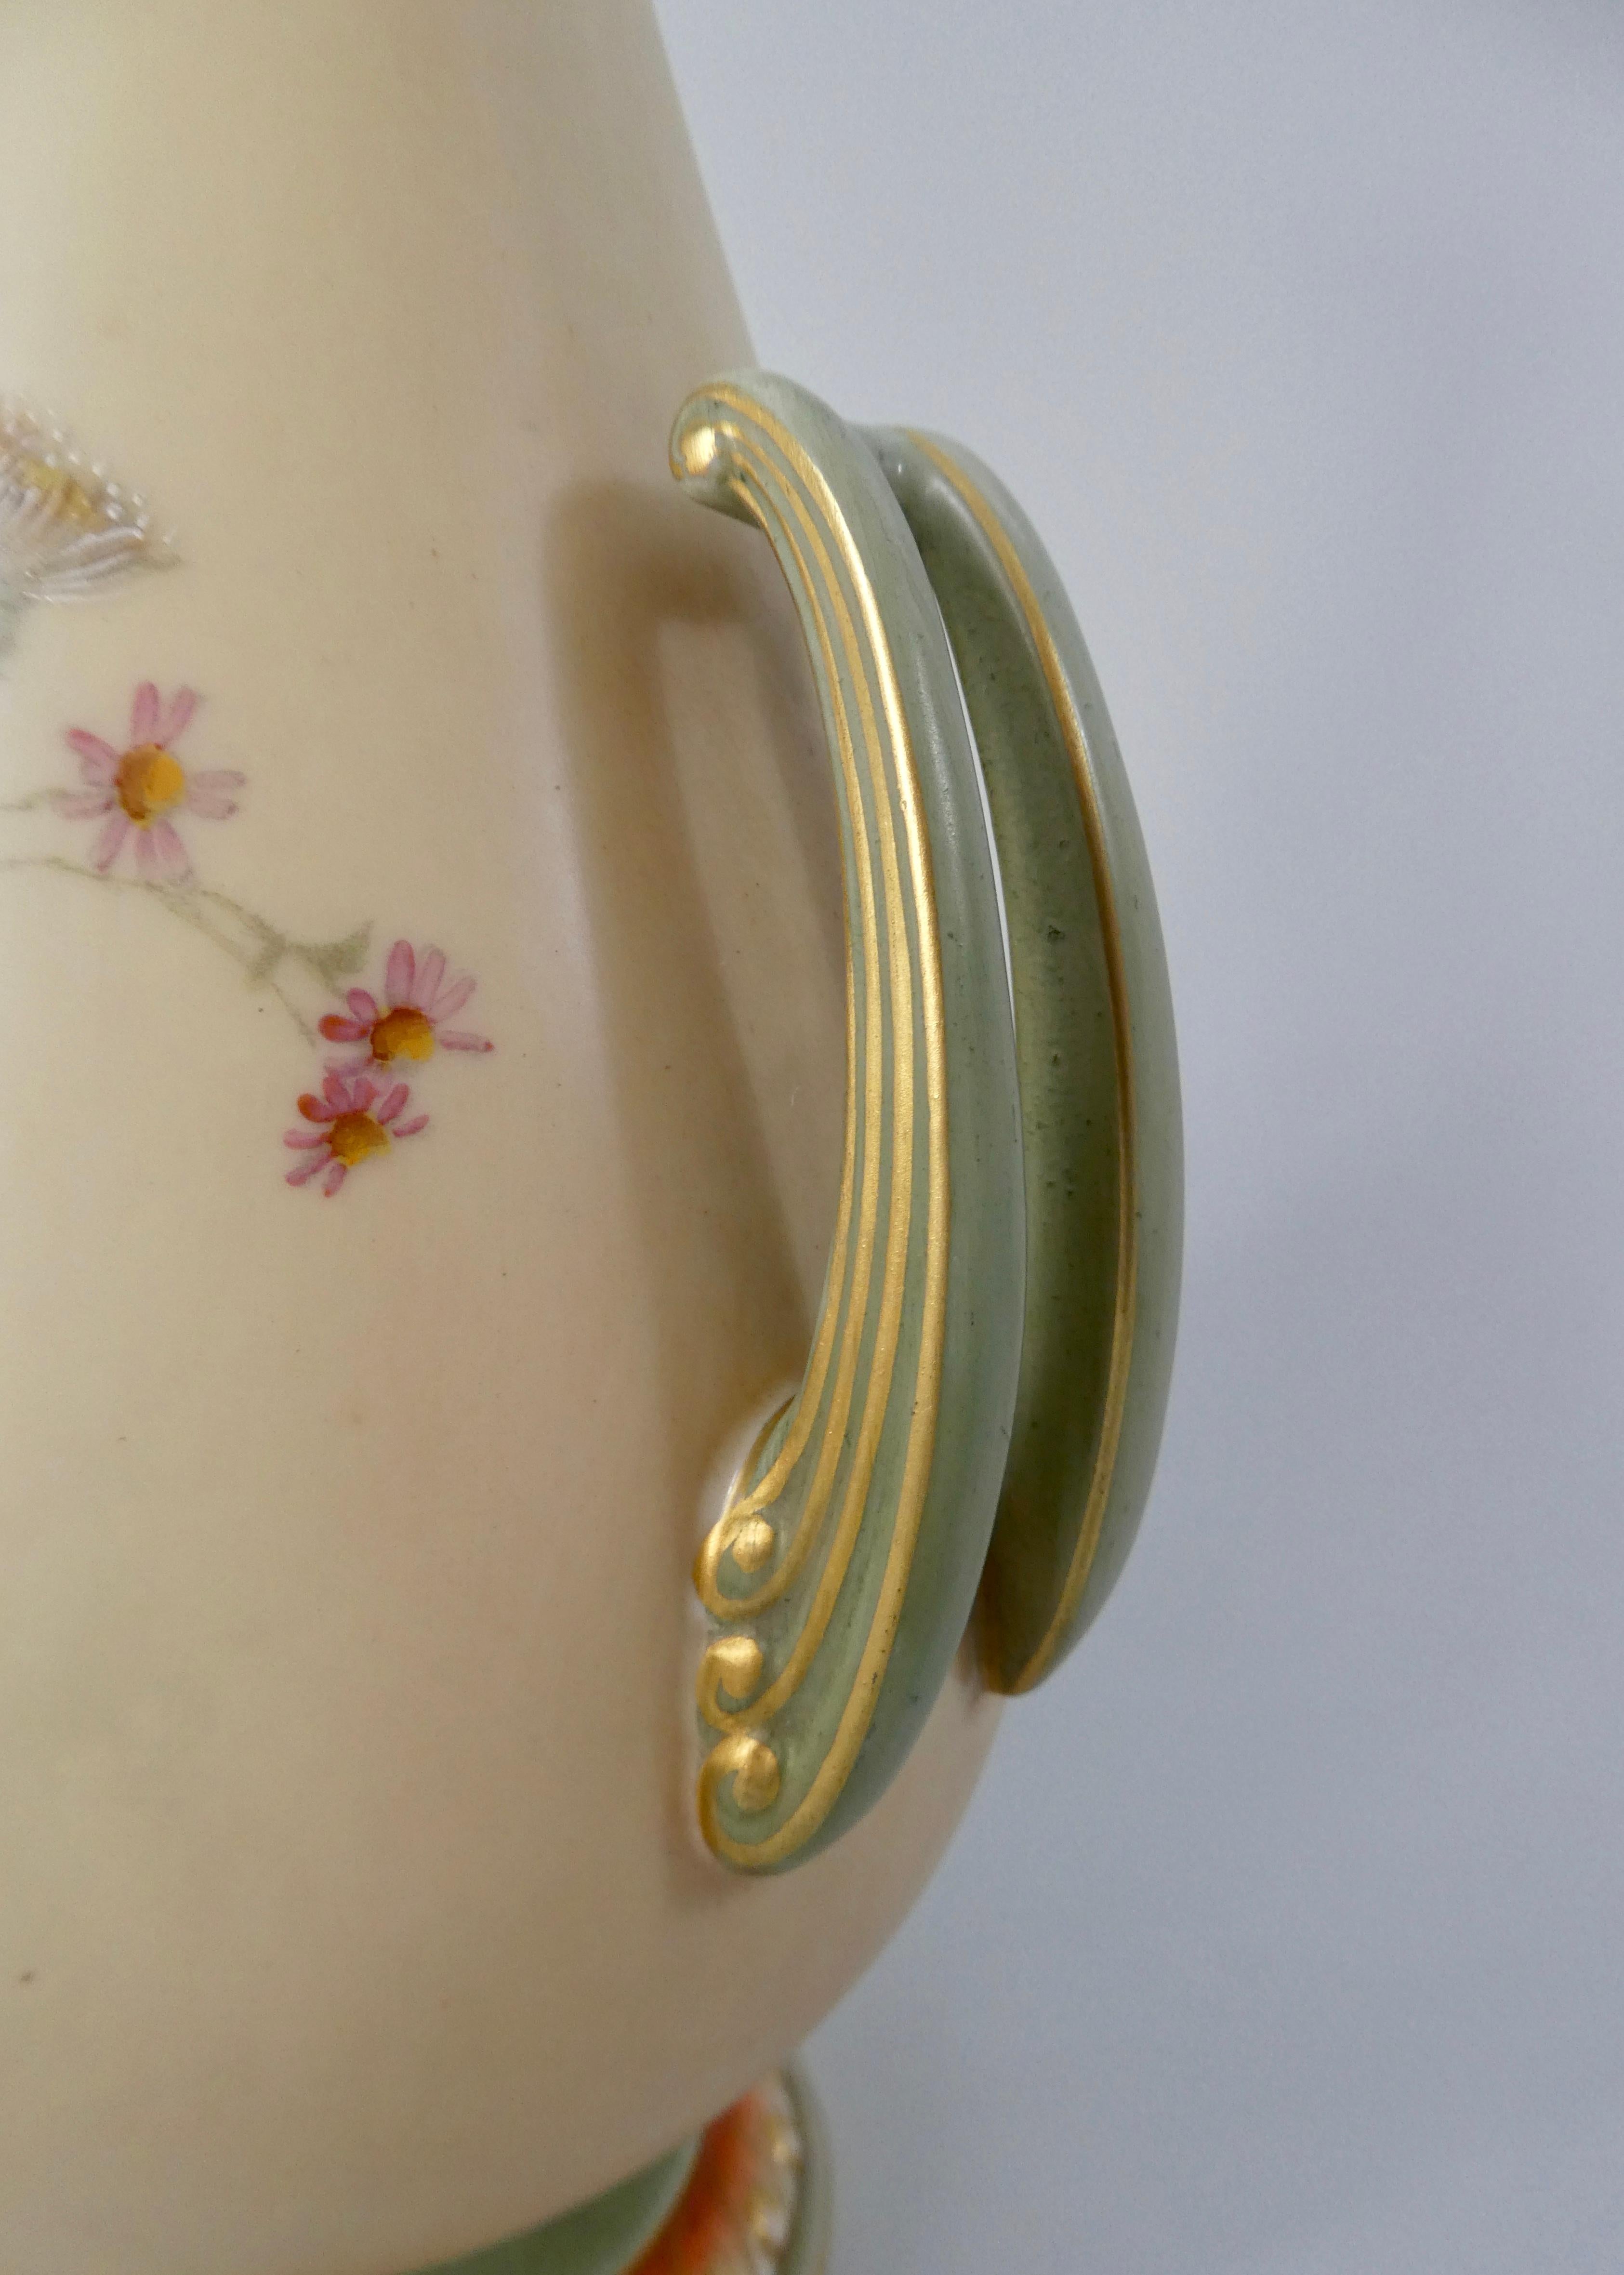 Fired Royal Worcester Porcelain Vase, Thistle Decoration, Dated 1901